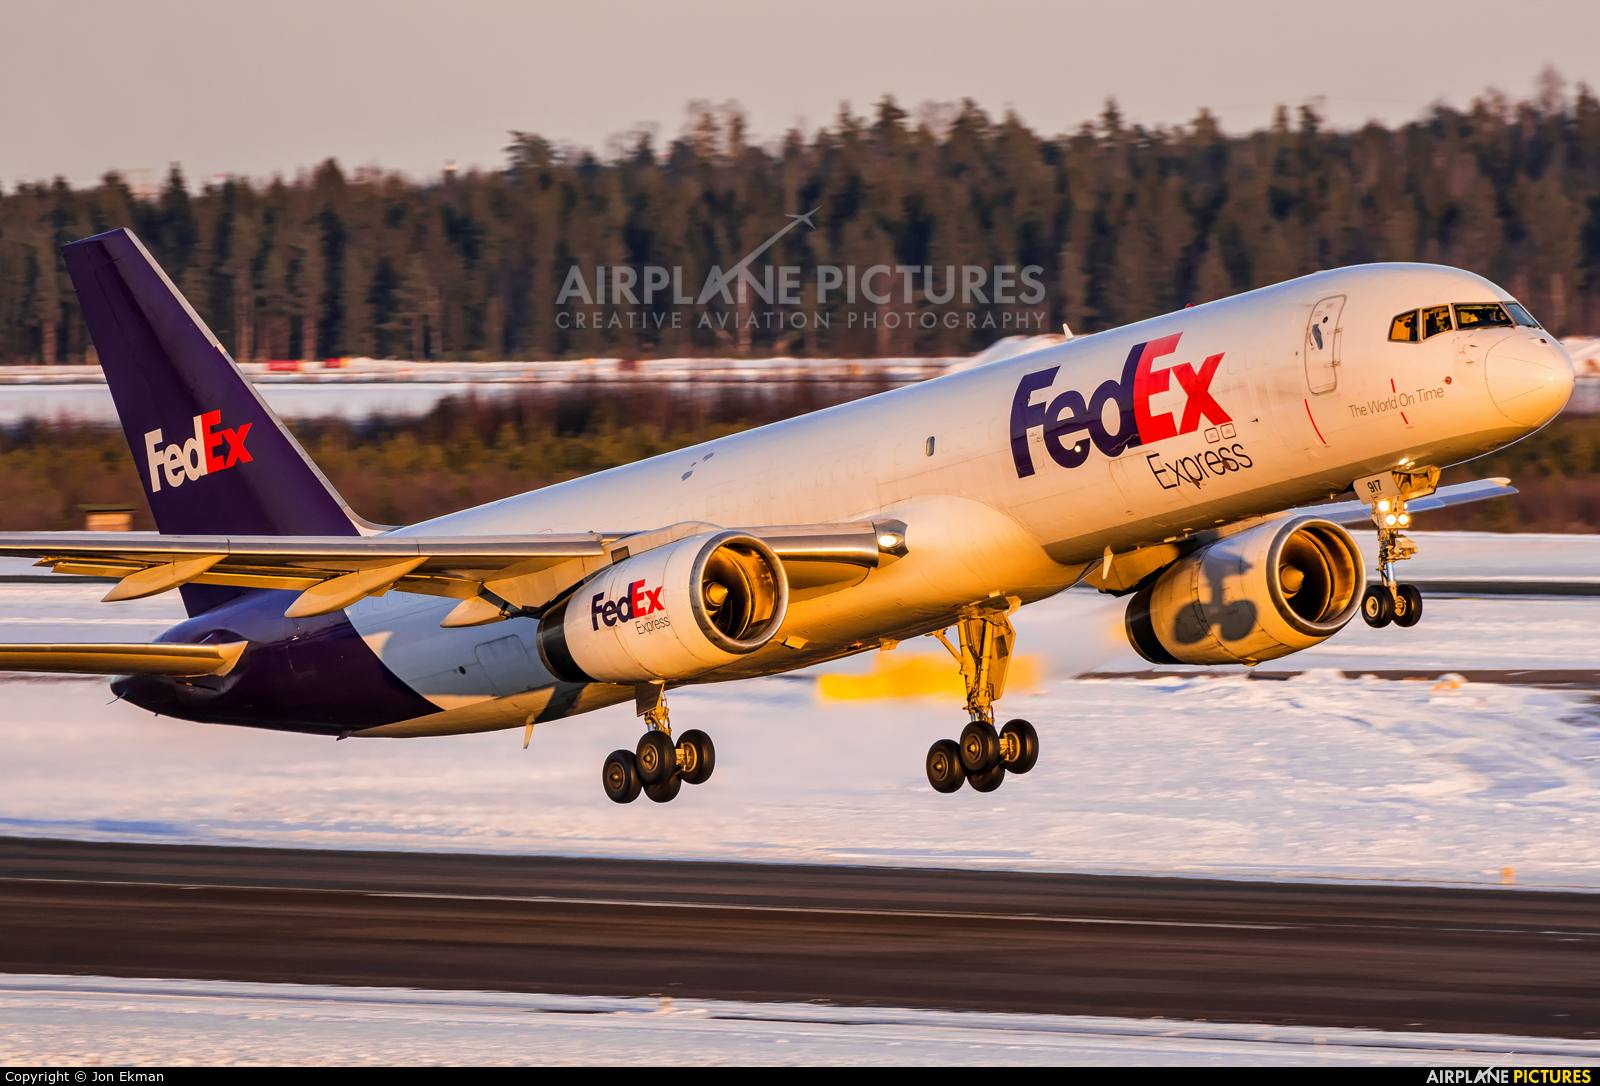 FedEx Federal Express N917FD aircraft at Helsinki - Vantaa